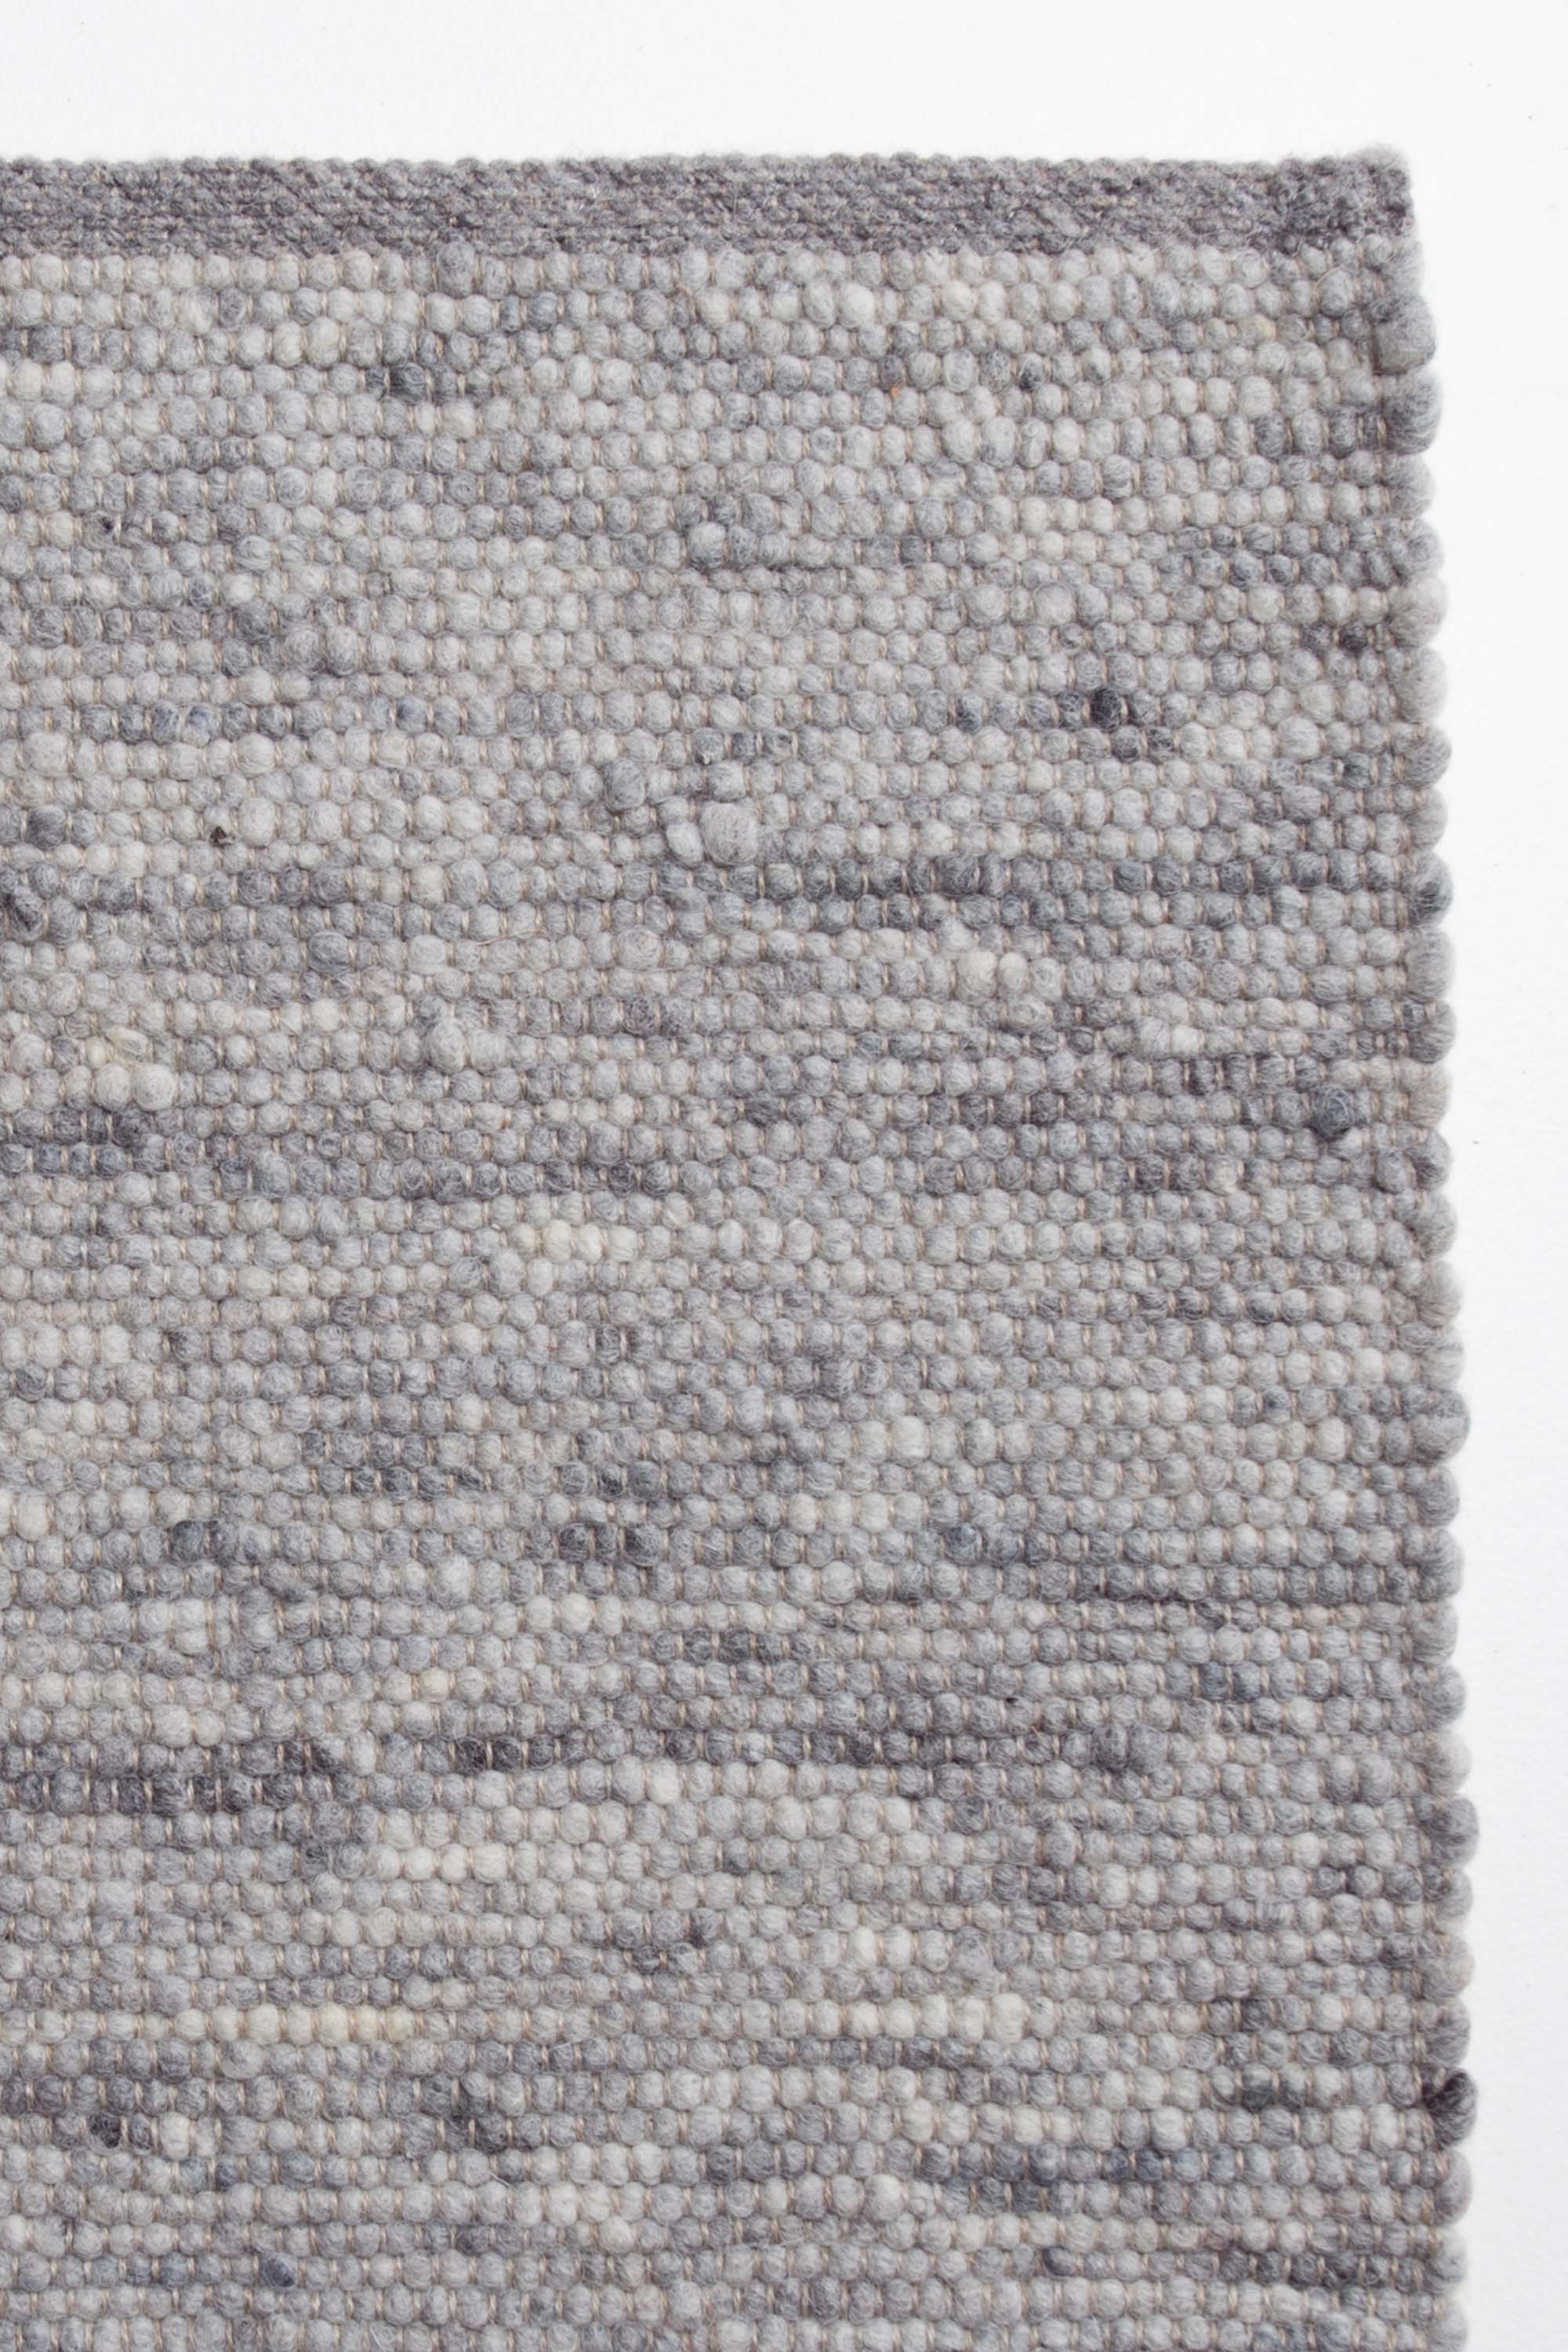 Silver luxury plain handwoven rug